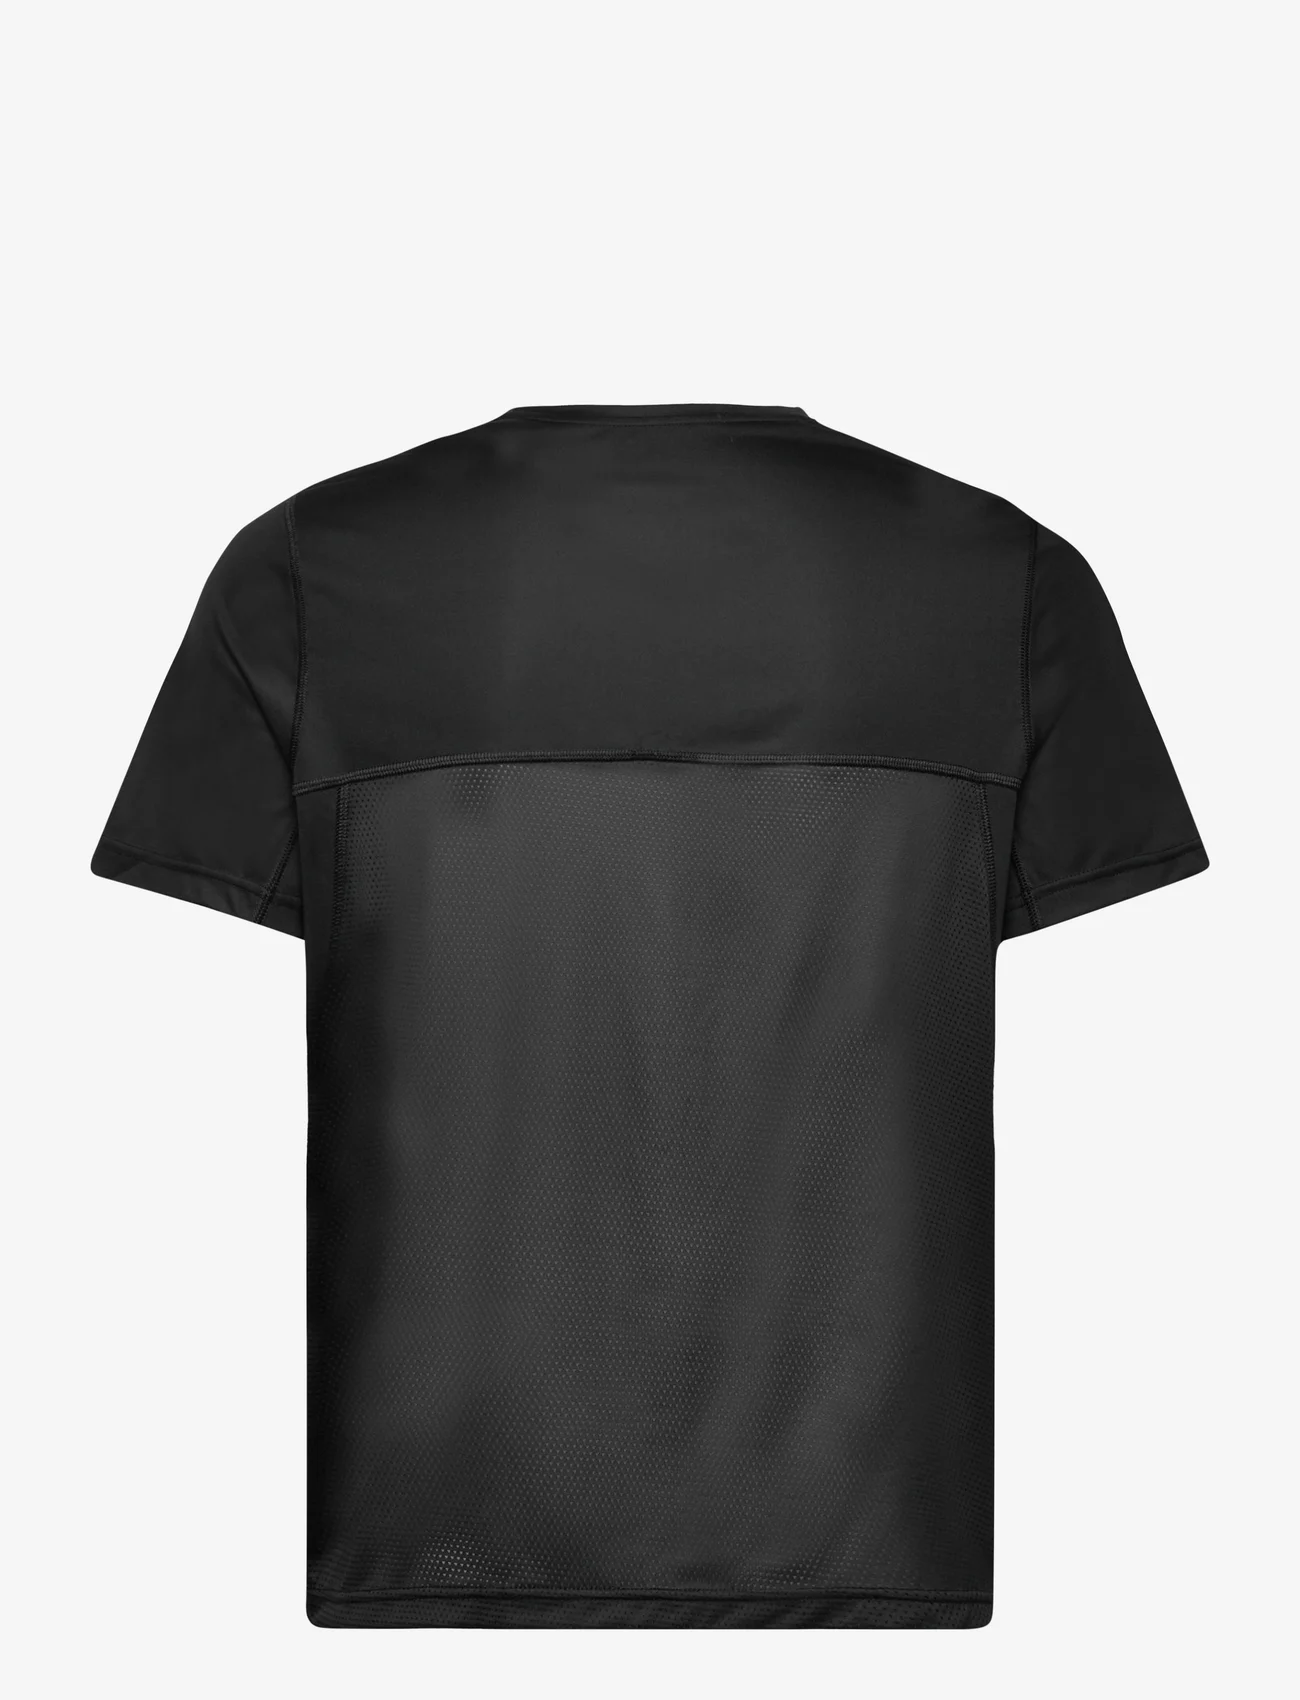 Reebok Performance - RUNNING SS SPEEDWICK - short-sleeved t-shirts - black - 1